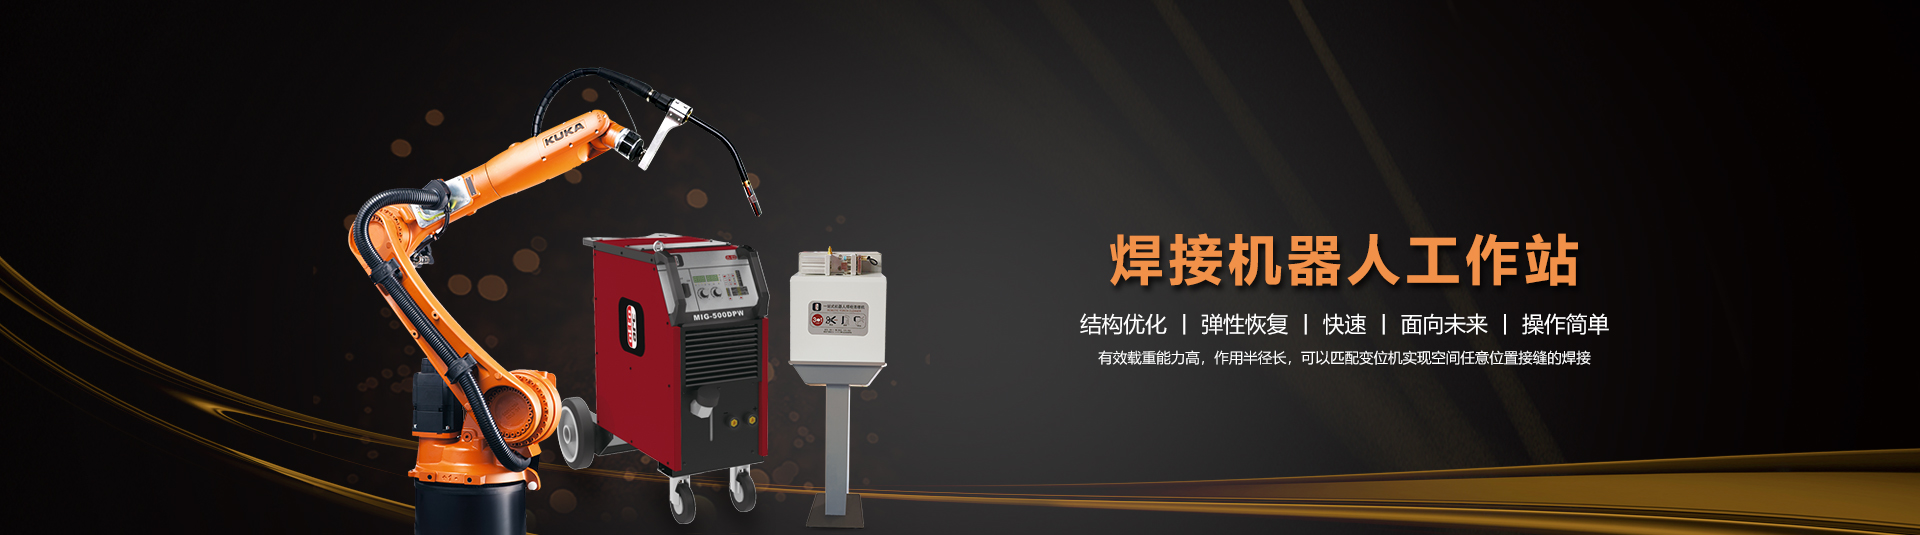 KUKA焊接机器人工作站.jpg